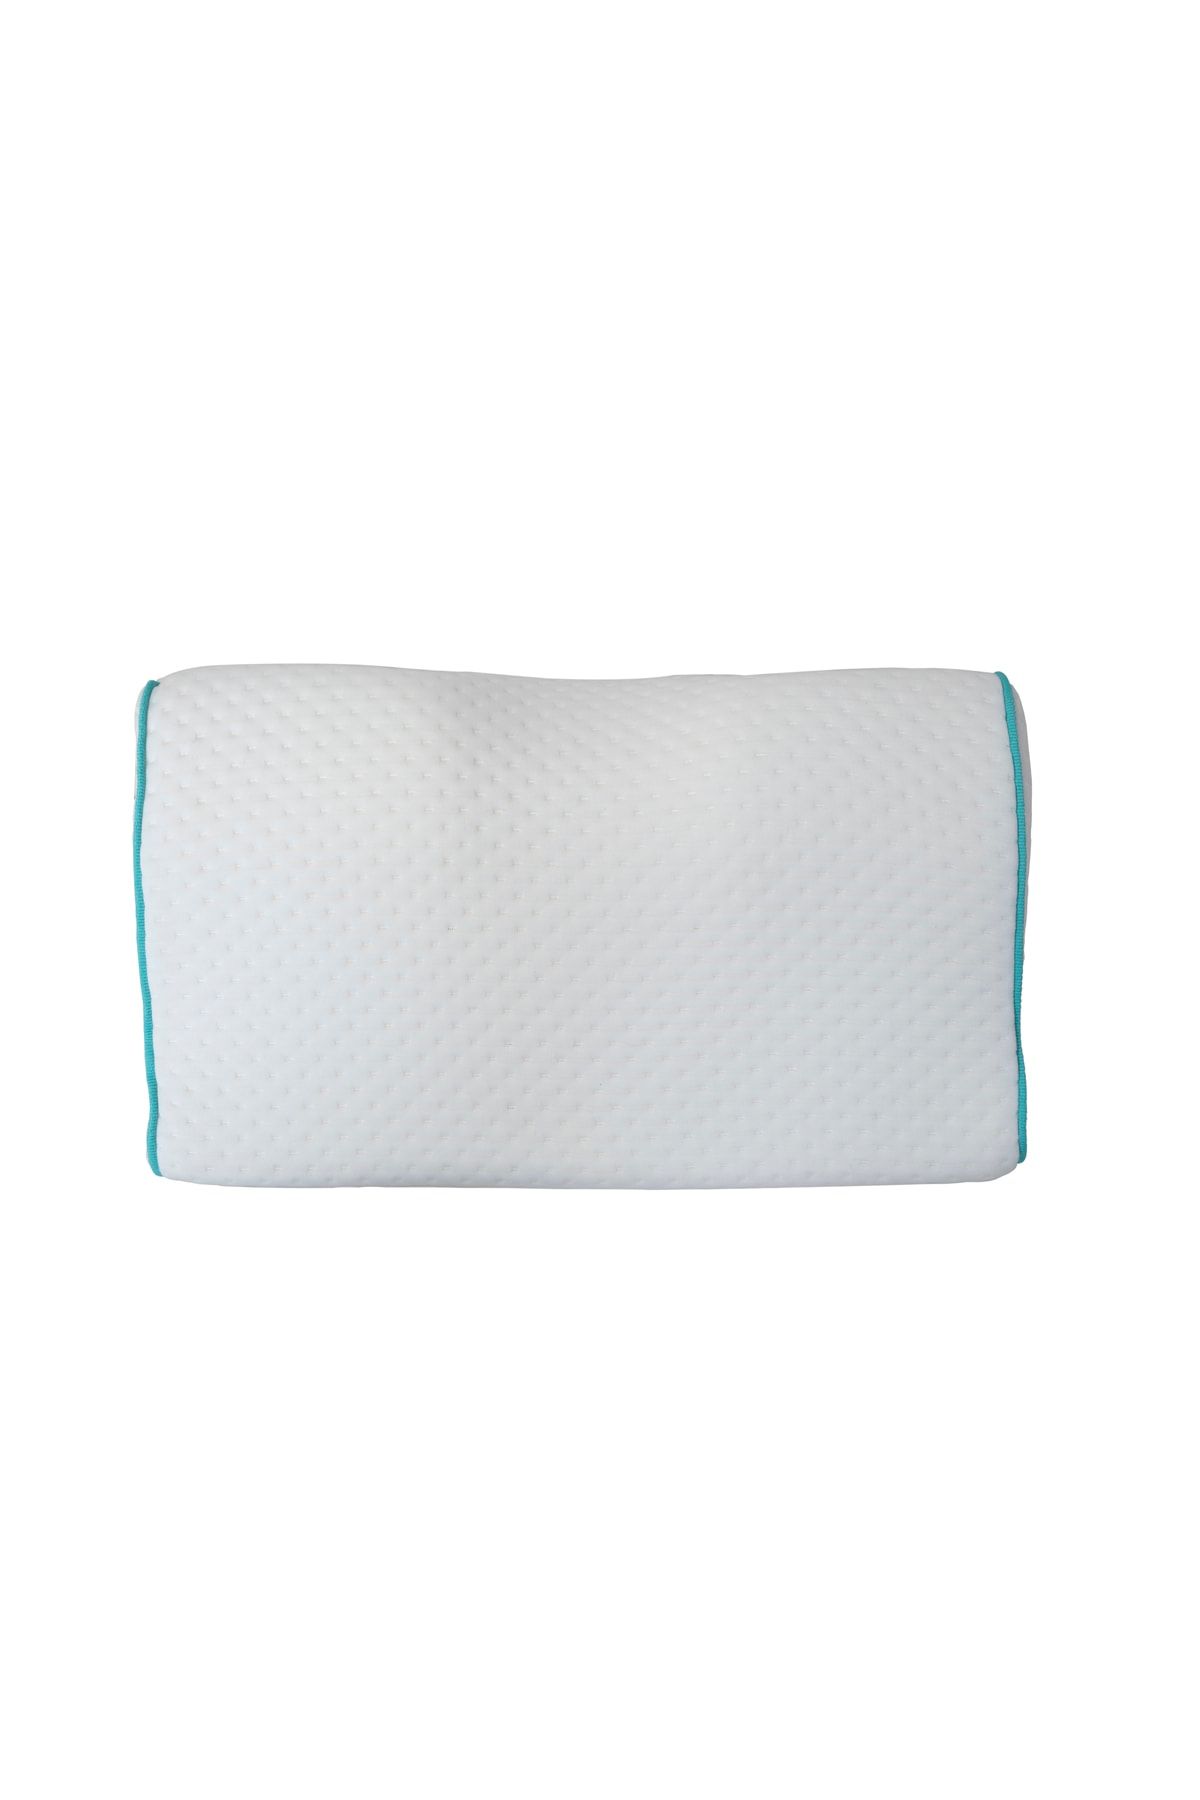 Karaca Home Visco Comfy Anti-snore Yastık 48 Cm X 28 Cm